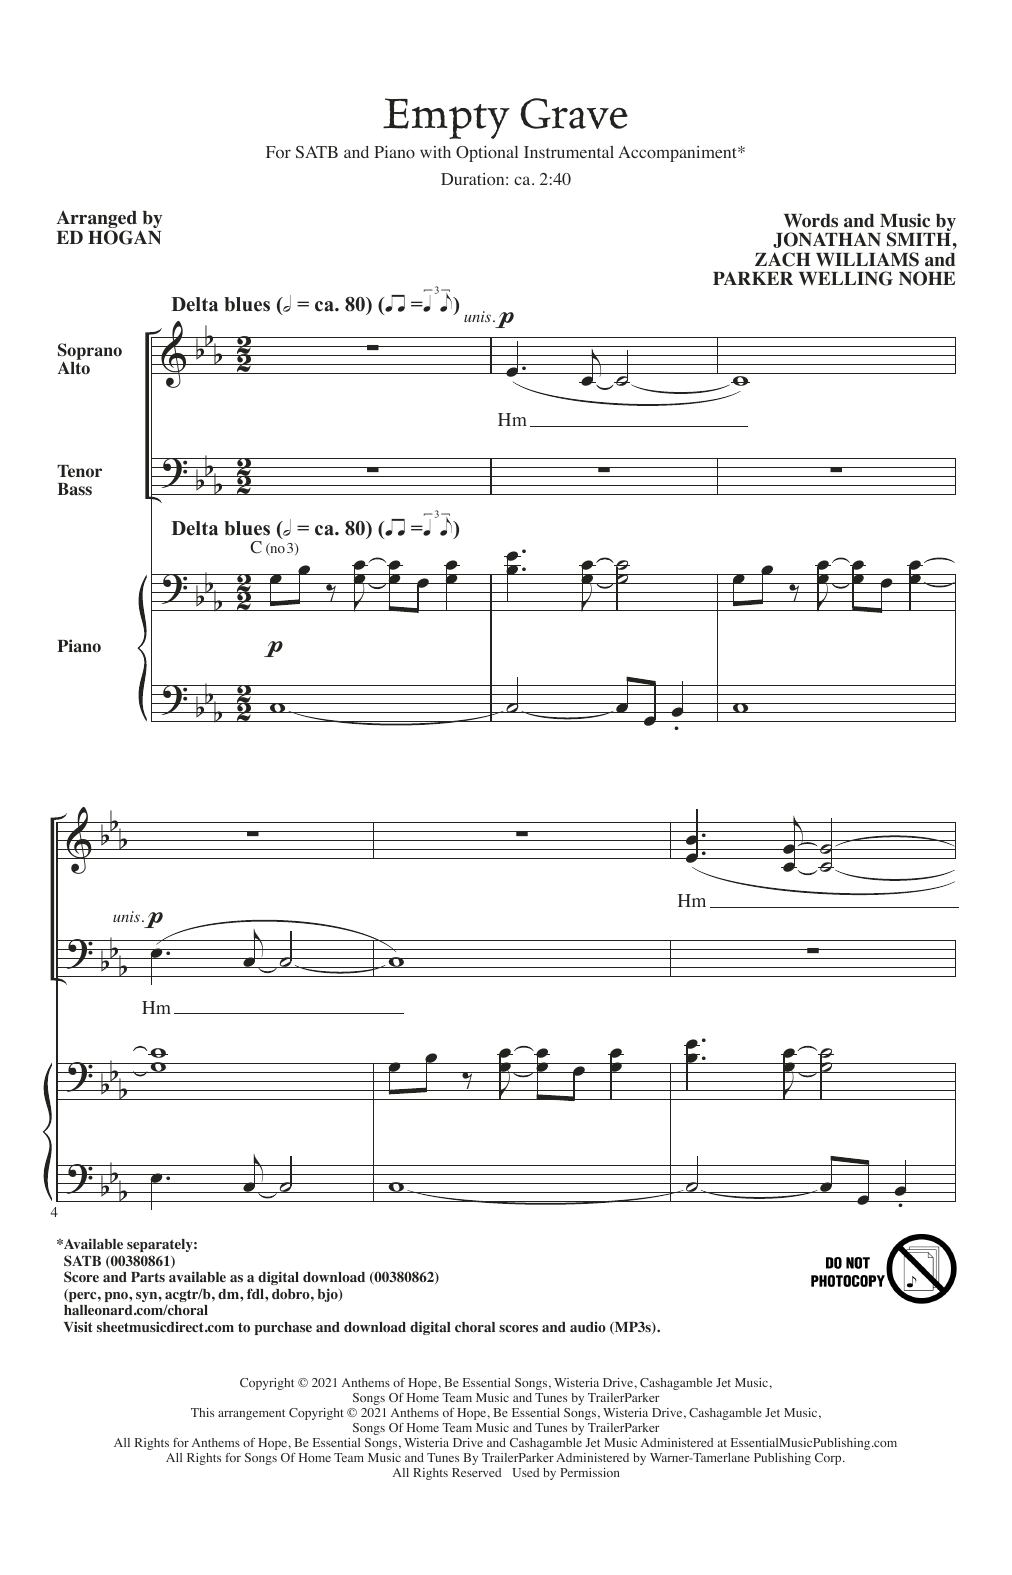 Zach Williams Empty Grave (arr. Ed Hogan) Sheet Music Notes & Chords for SATB Choir - Download or Print PDF